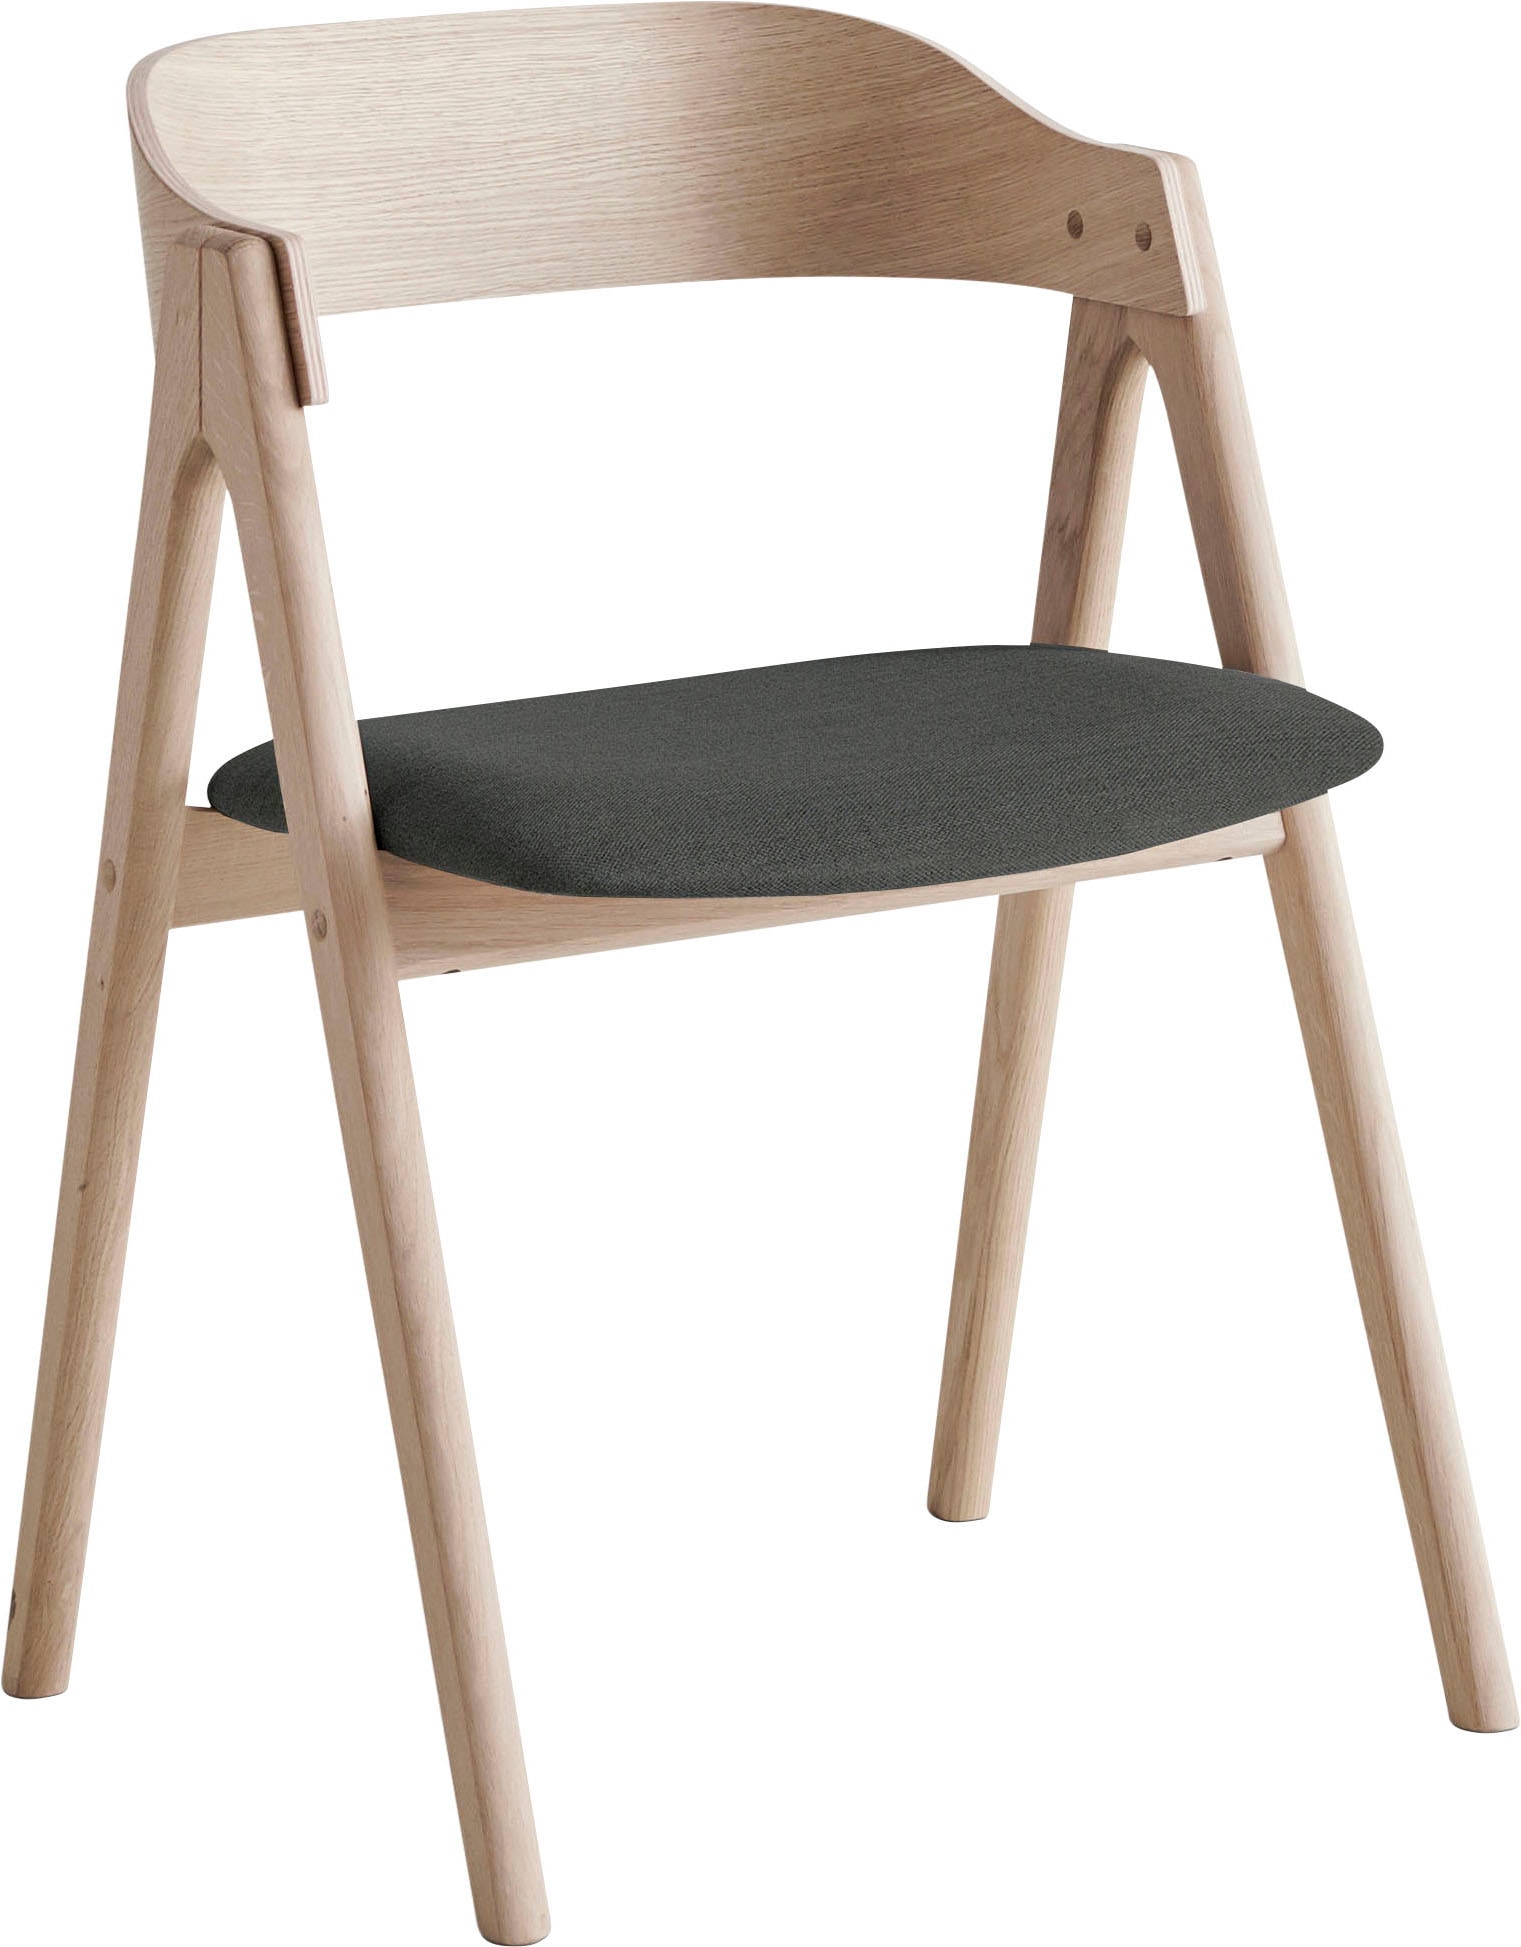 Hammel Furniture online bestellen by Farbvarianten (Set), versch. Holzstuhl Mette«, gepolsterte Sitzfläche, Hammel 2 St., »Findahl Massivholz